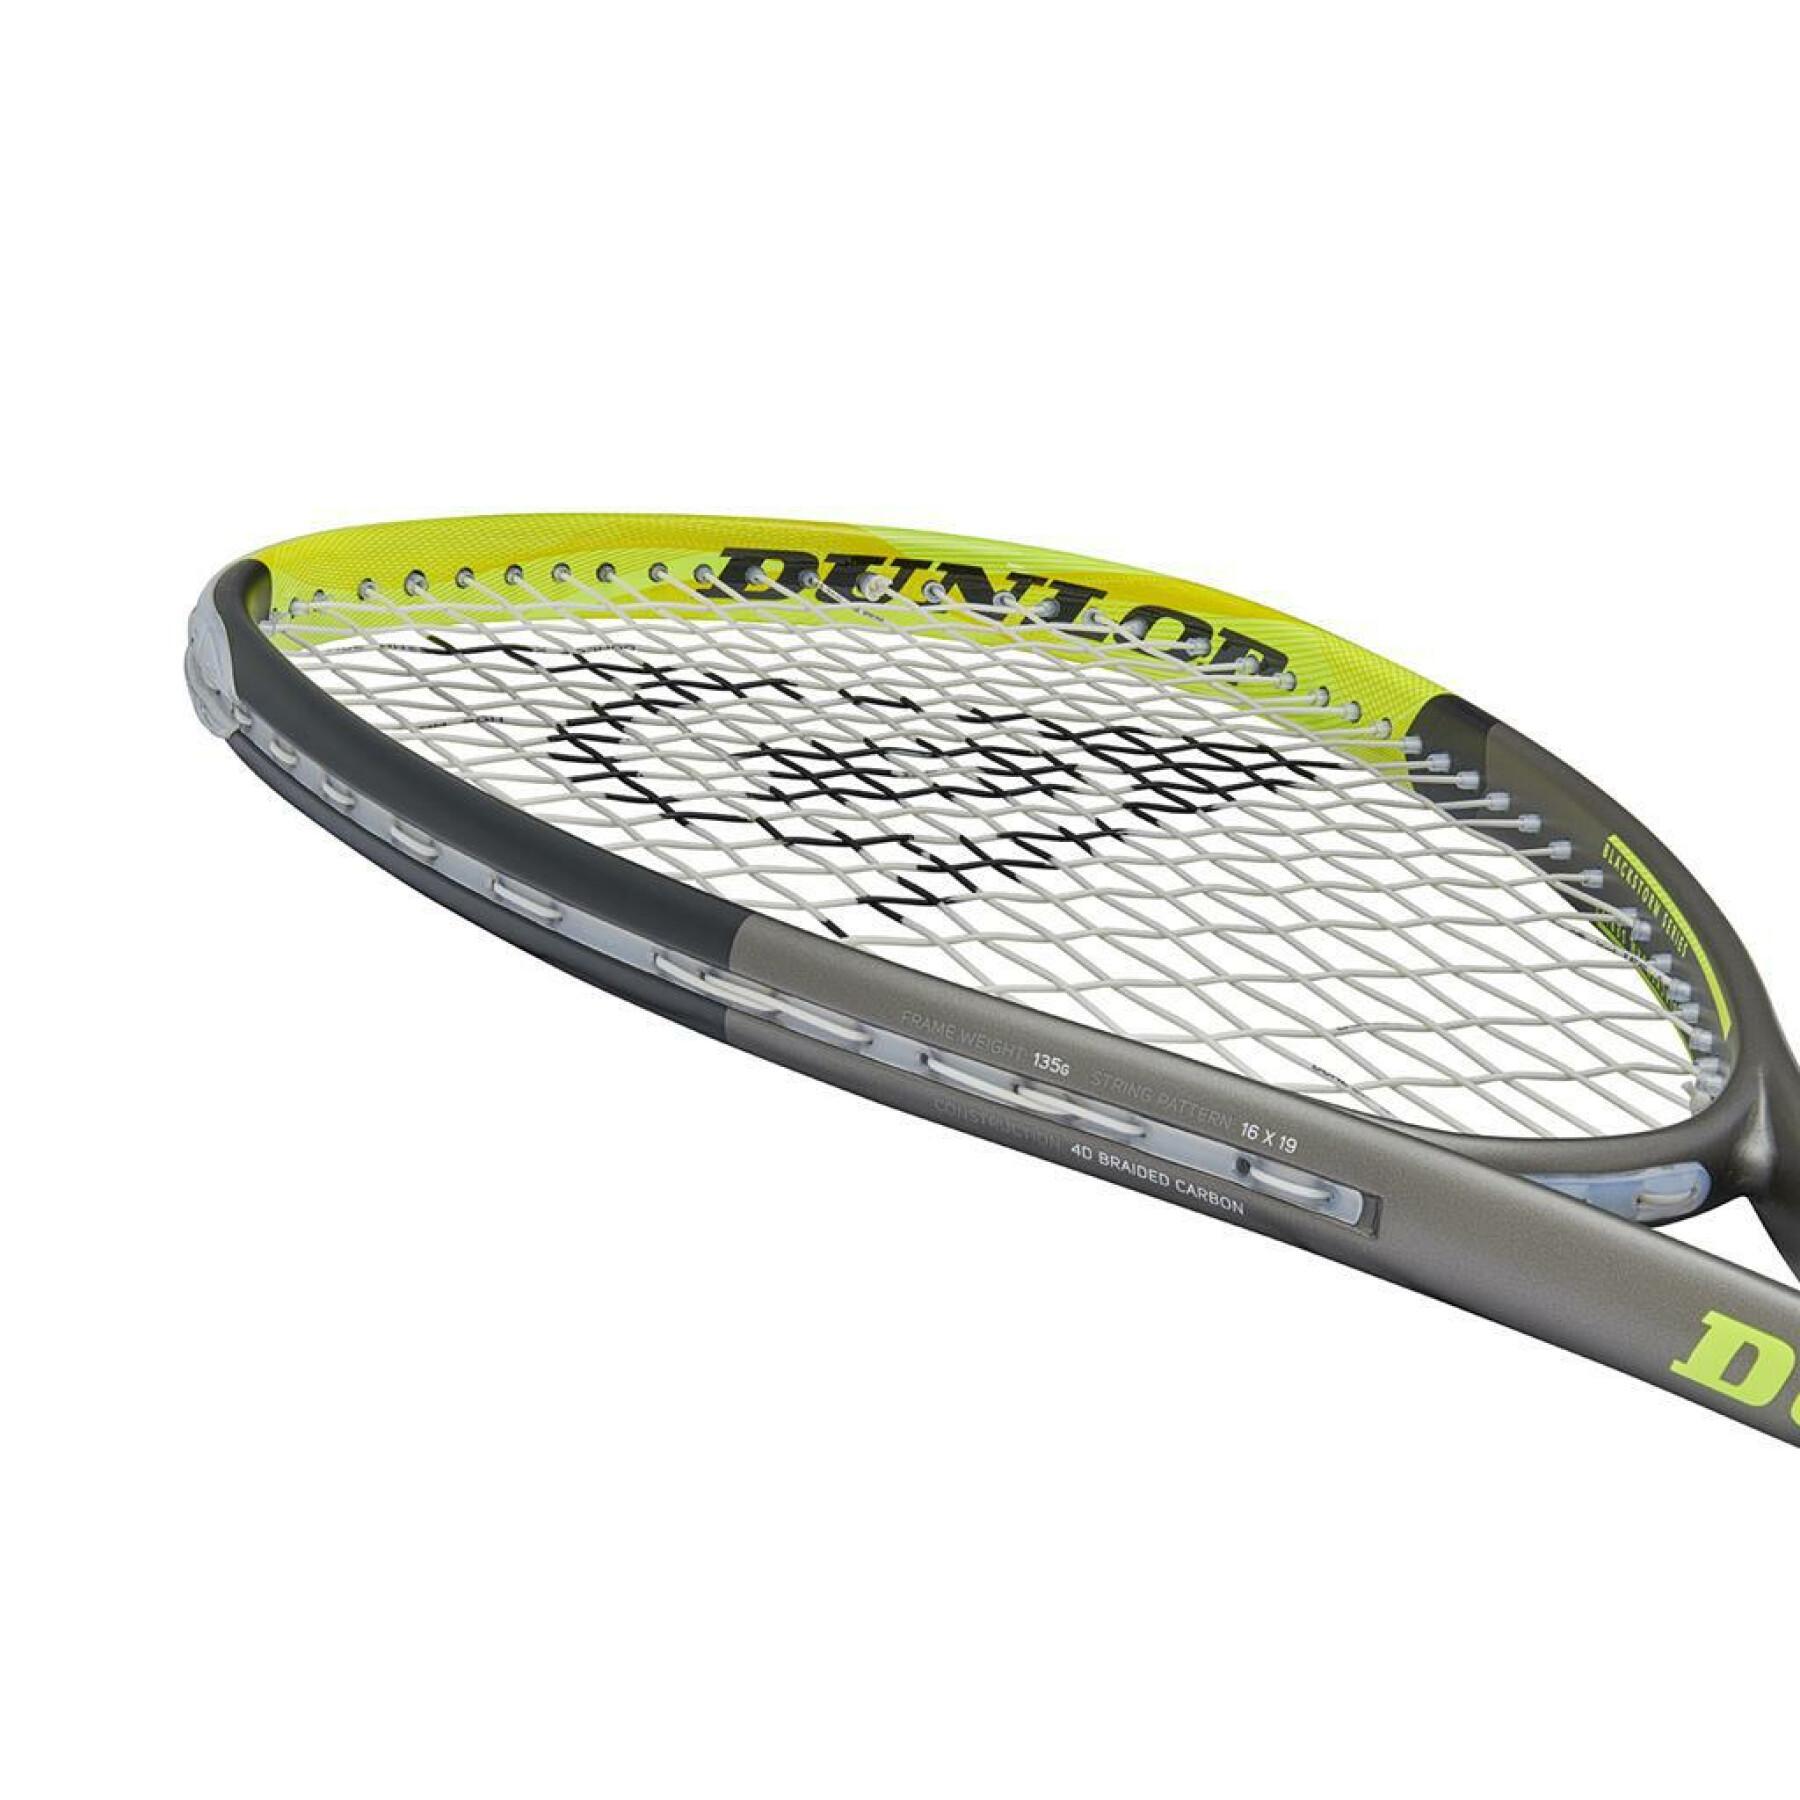 Racket Dunlop storm graphite 5.0